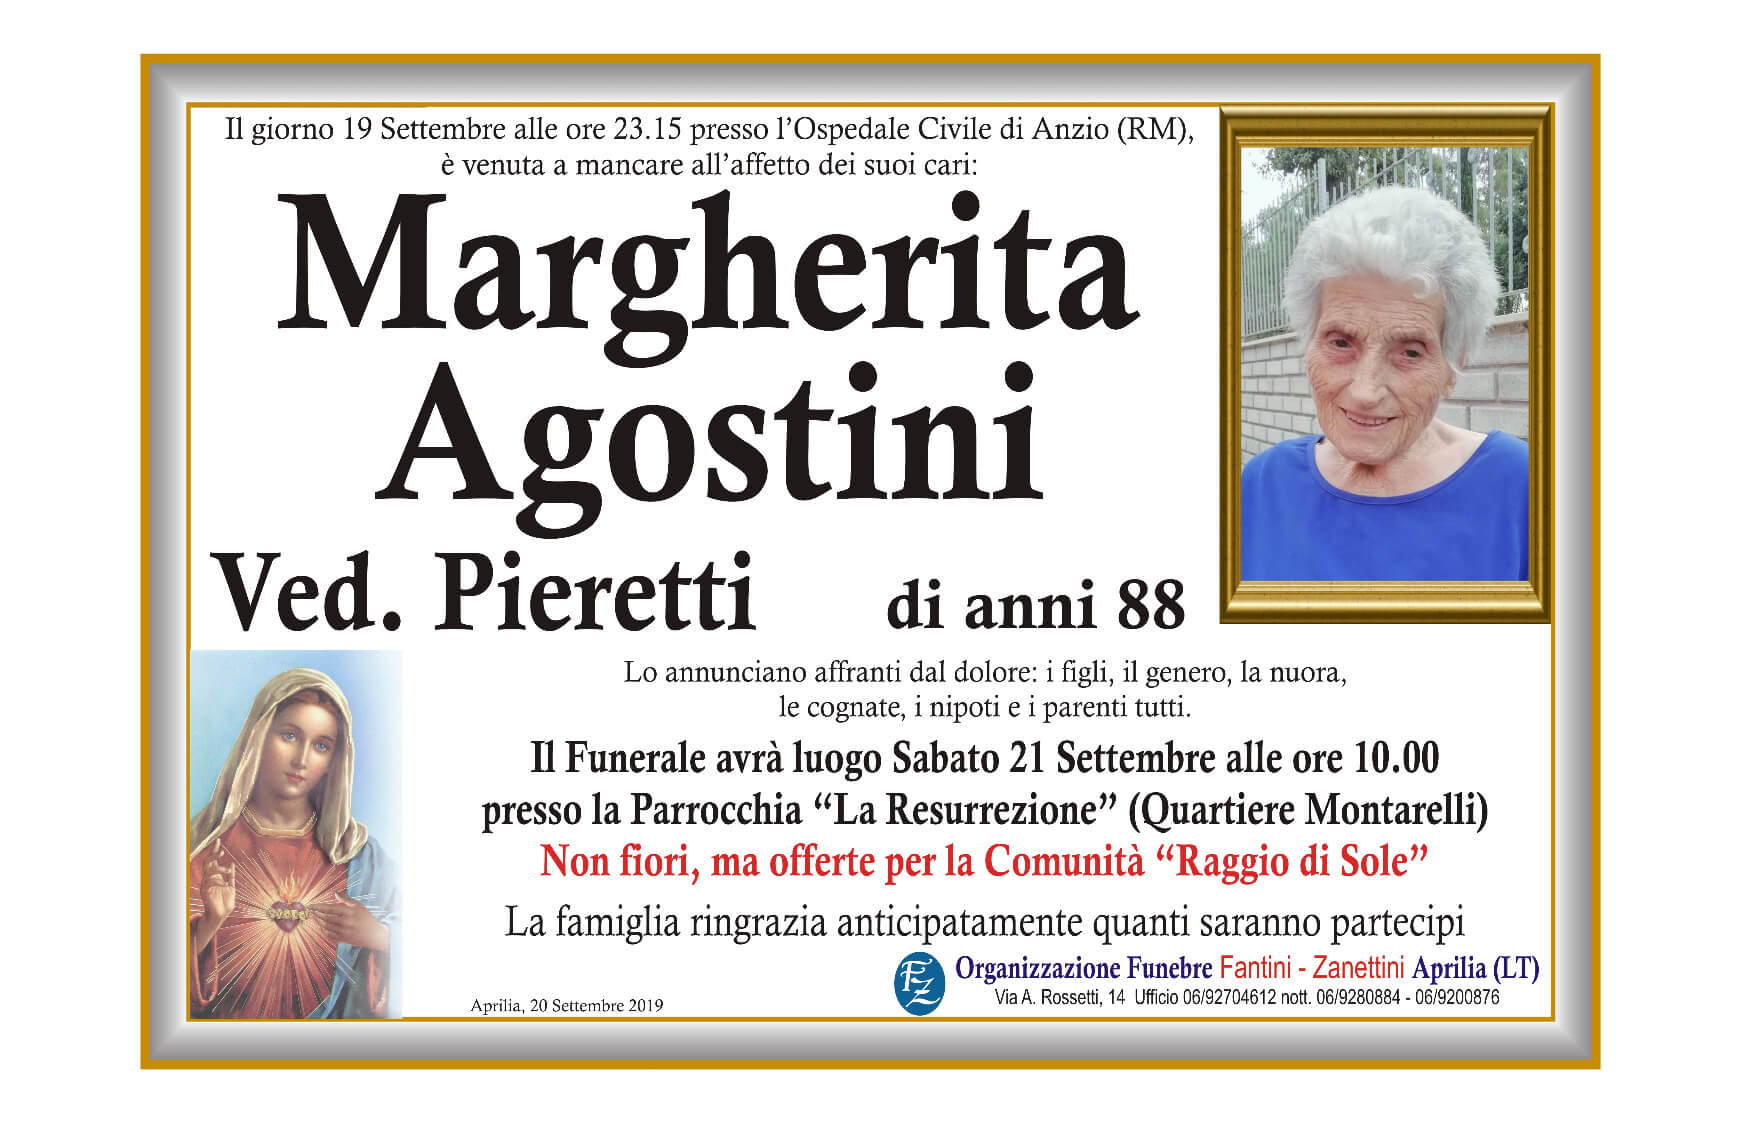 Margherita Agostini